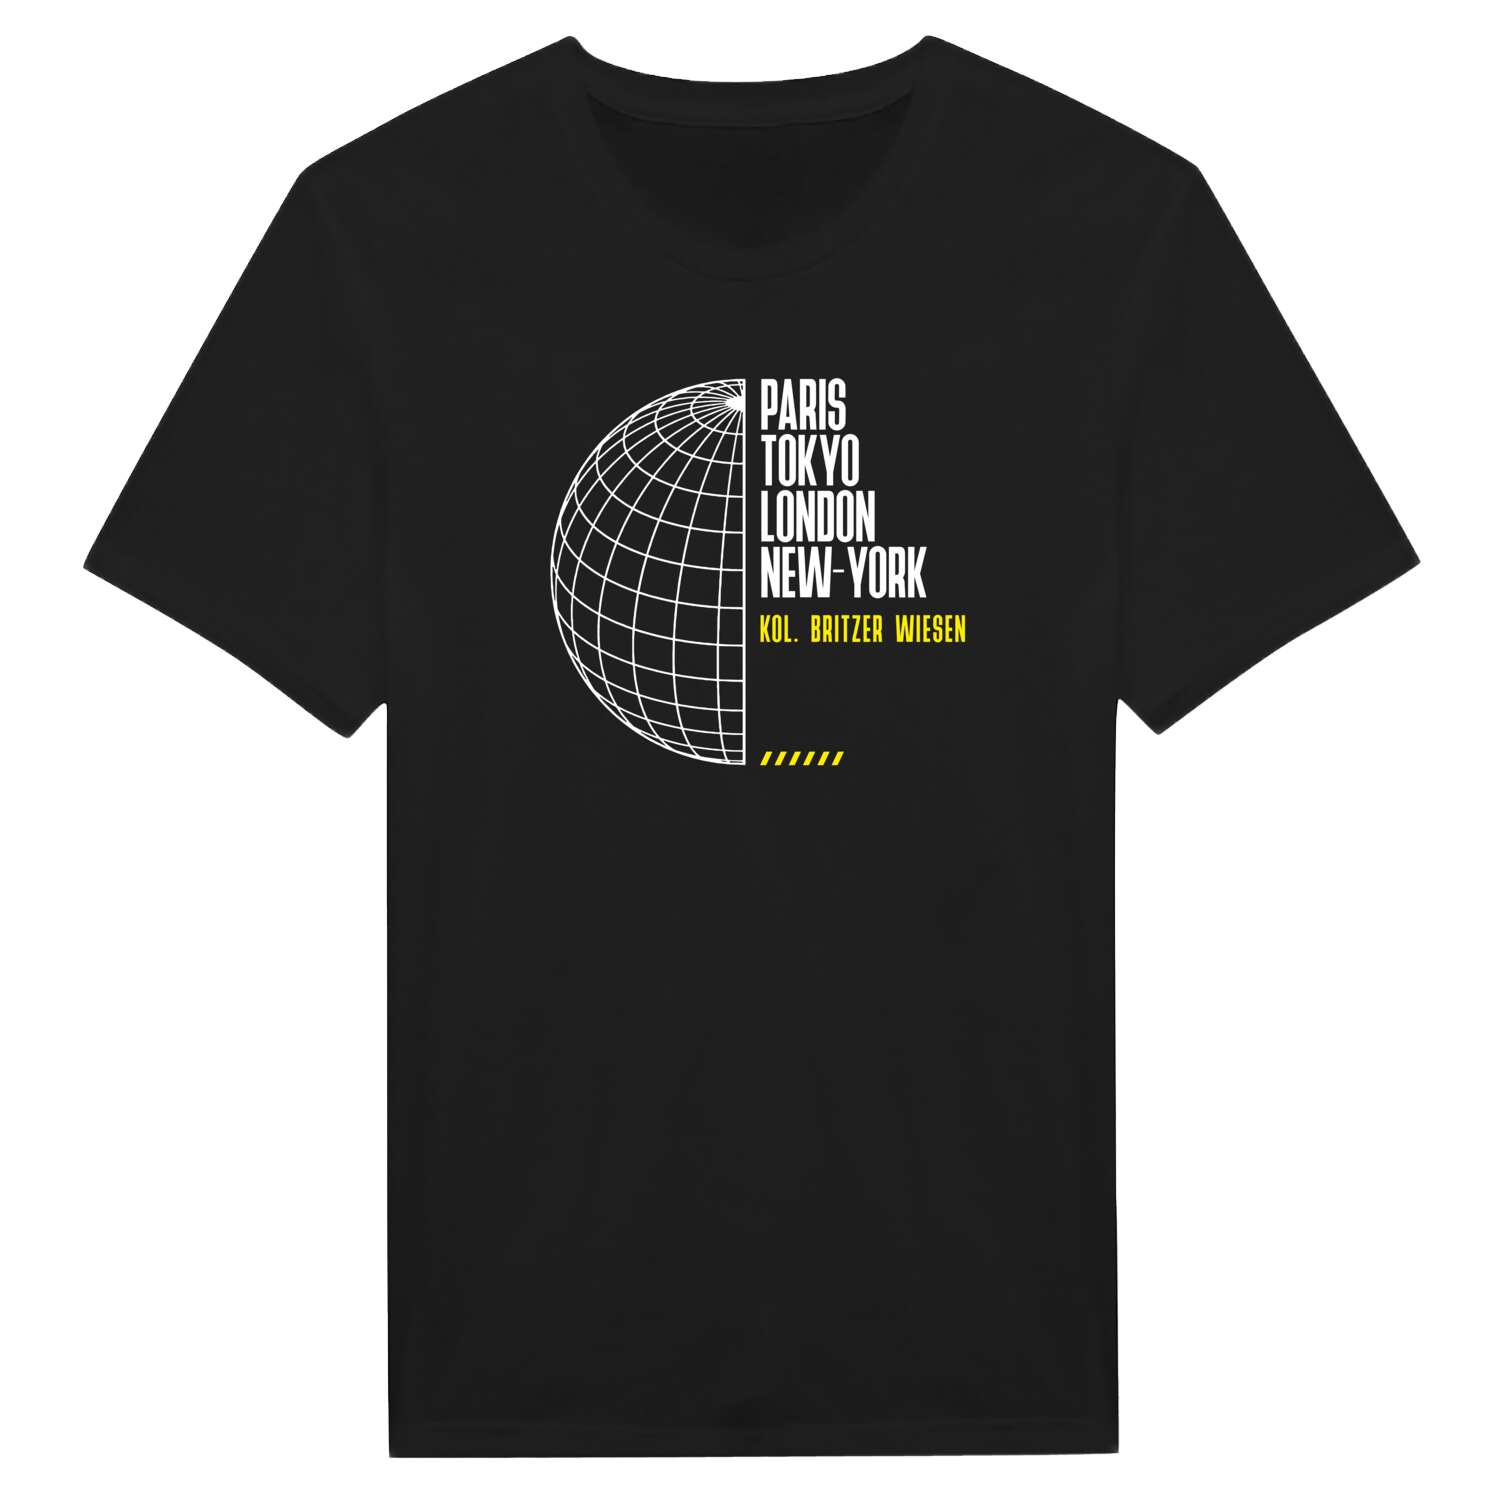 Kol. Britzer Wiesen T-Shirt »Paris Tokyo London«